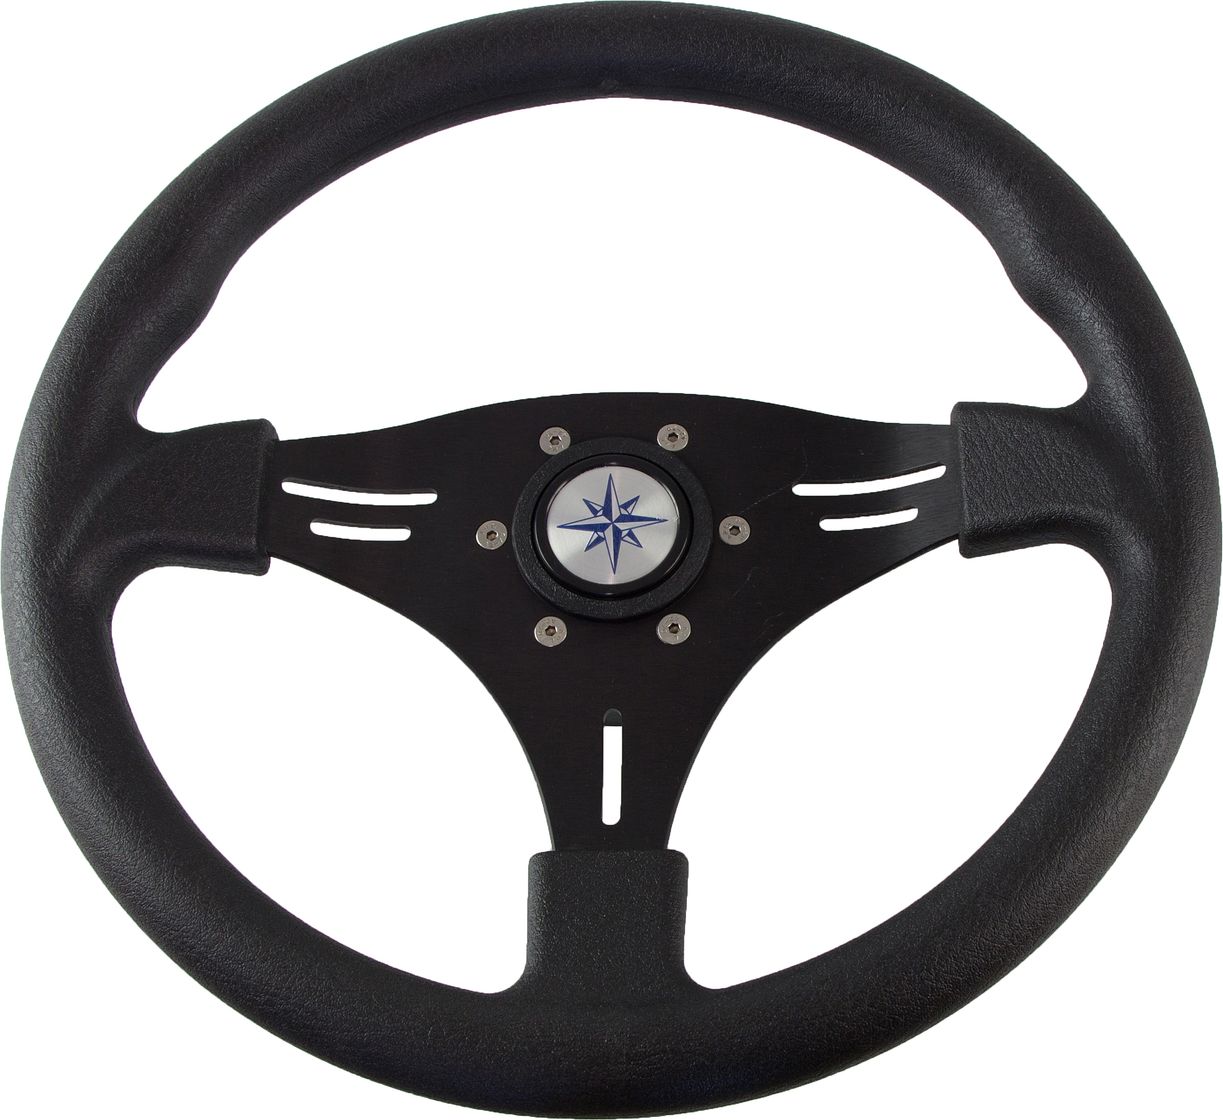 Рулевое колесо MANTA обод и спицы черные д. 355 мм VN70552-01 рулевое колесо leader tanegum обод серебряные спицы д 360 мм vn7360 01